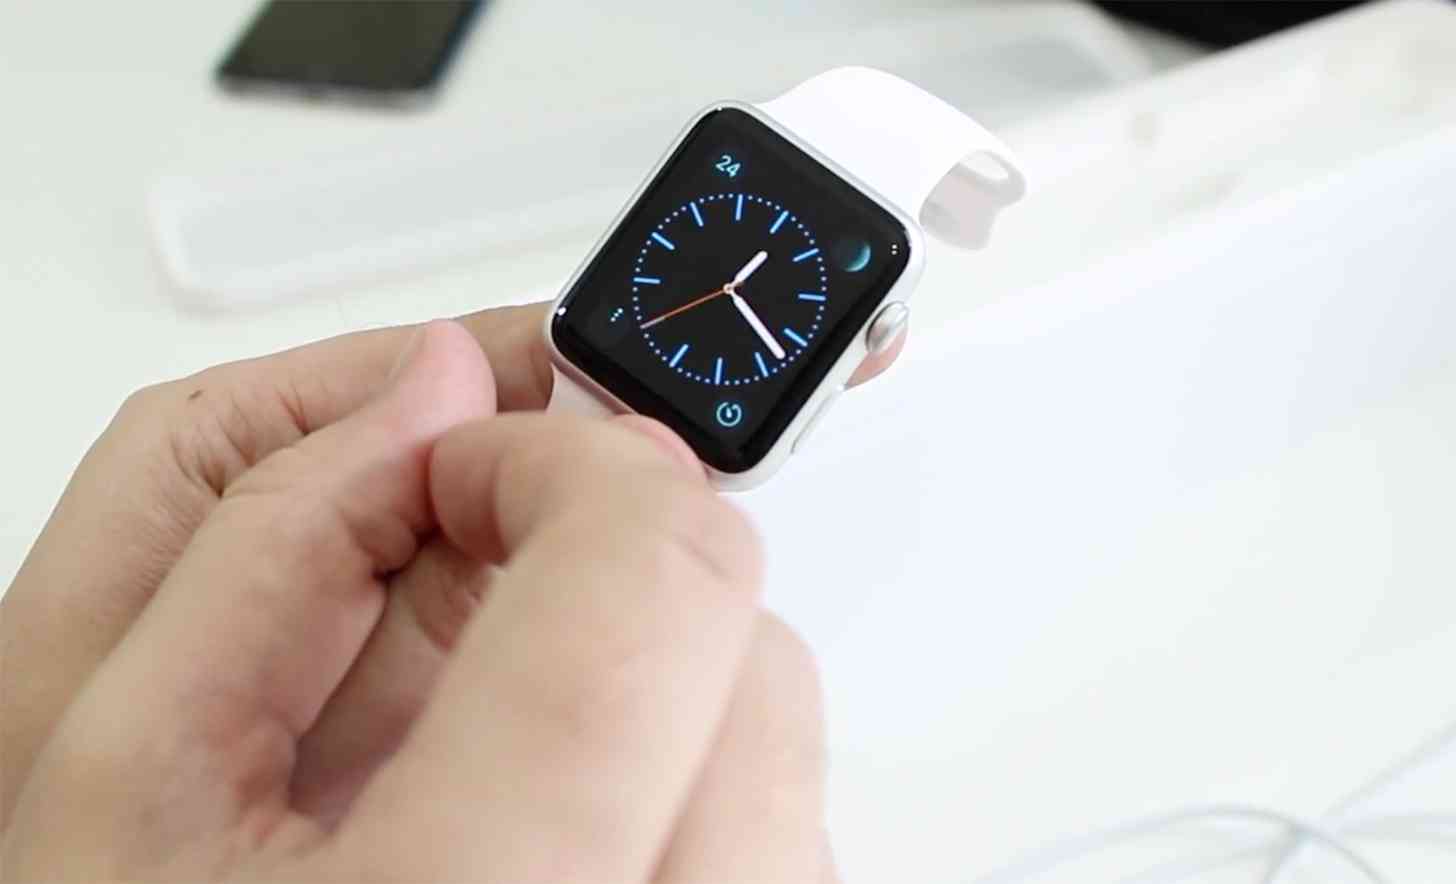 Apple Watch face